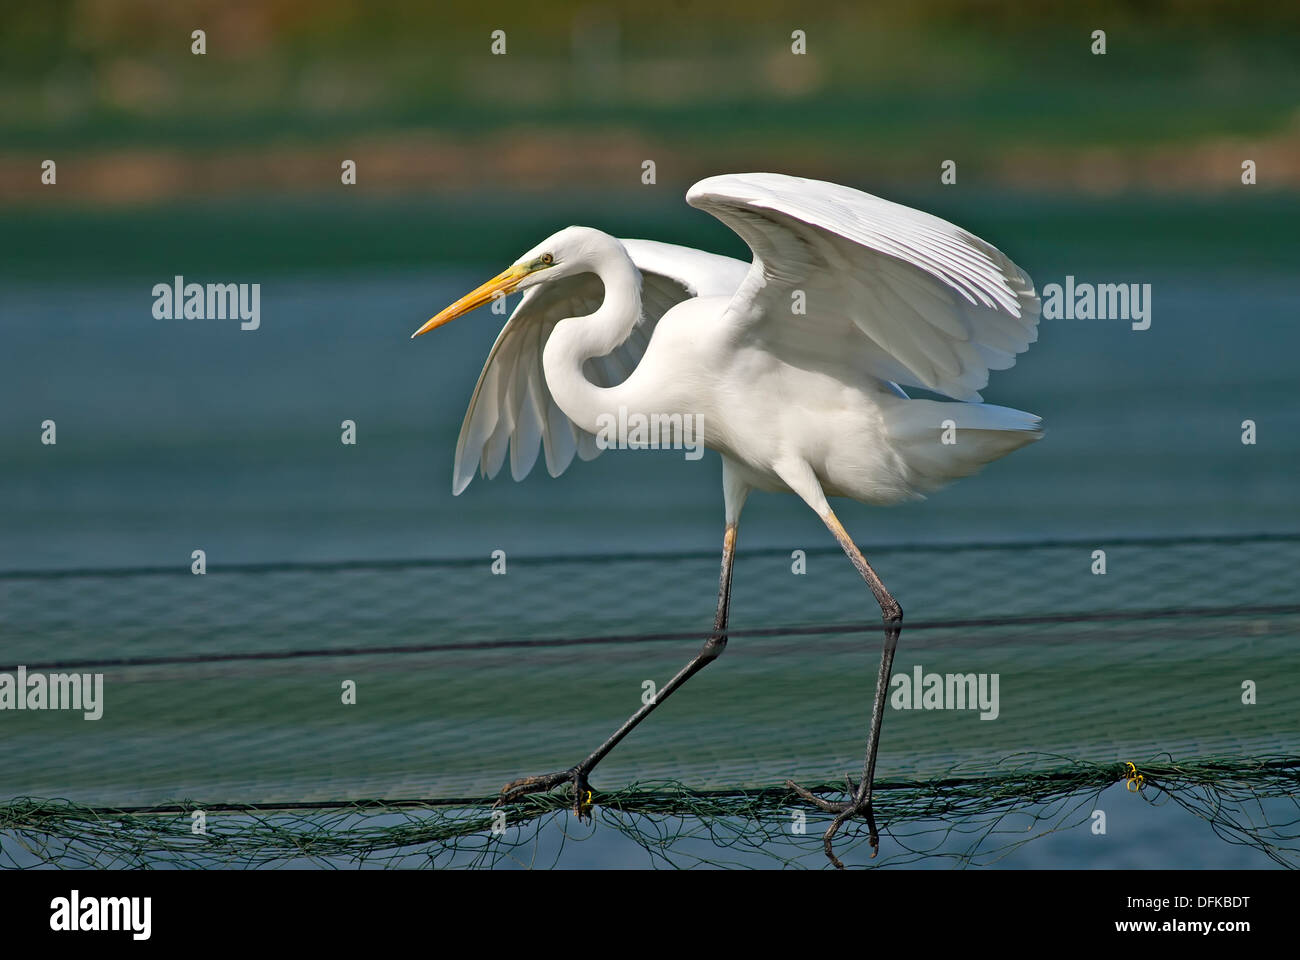 Gran egret equilibrio sobre un cable de red a través de un estanque de pesca Foto de stock